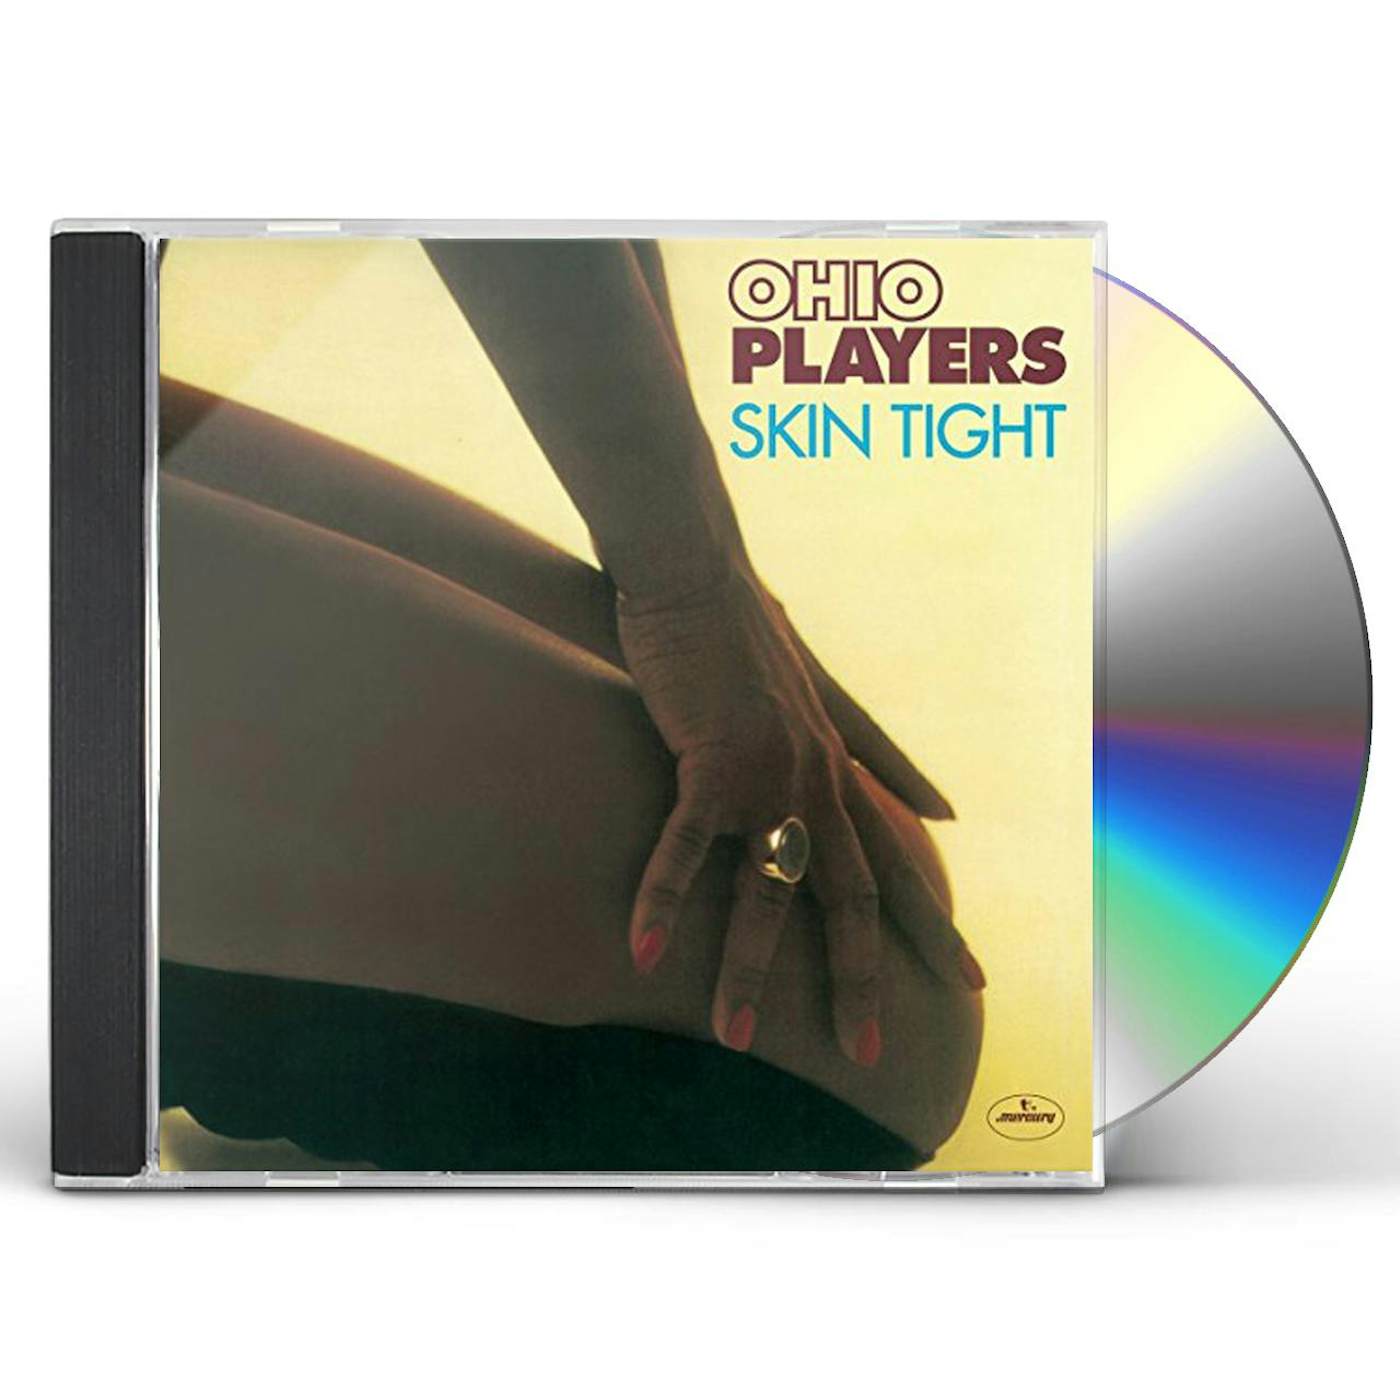 Ohio Players SKIN TIGHT + 1 BONUS TRACK CD